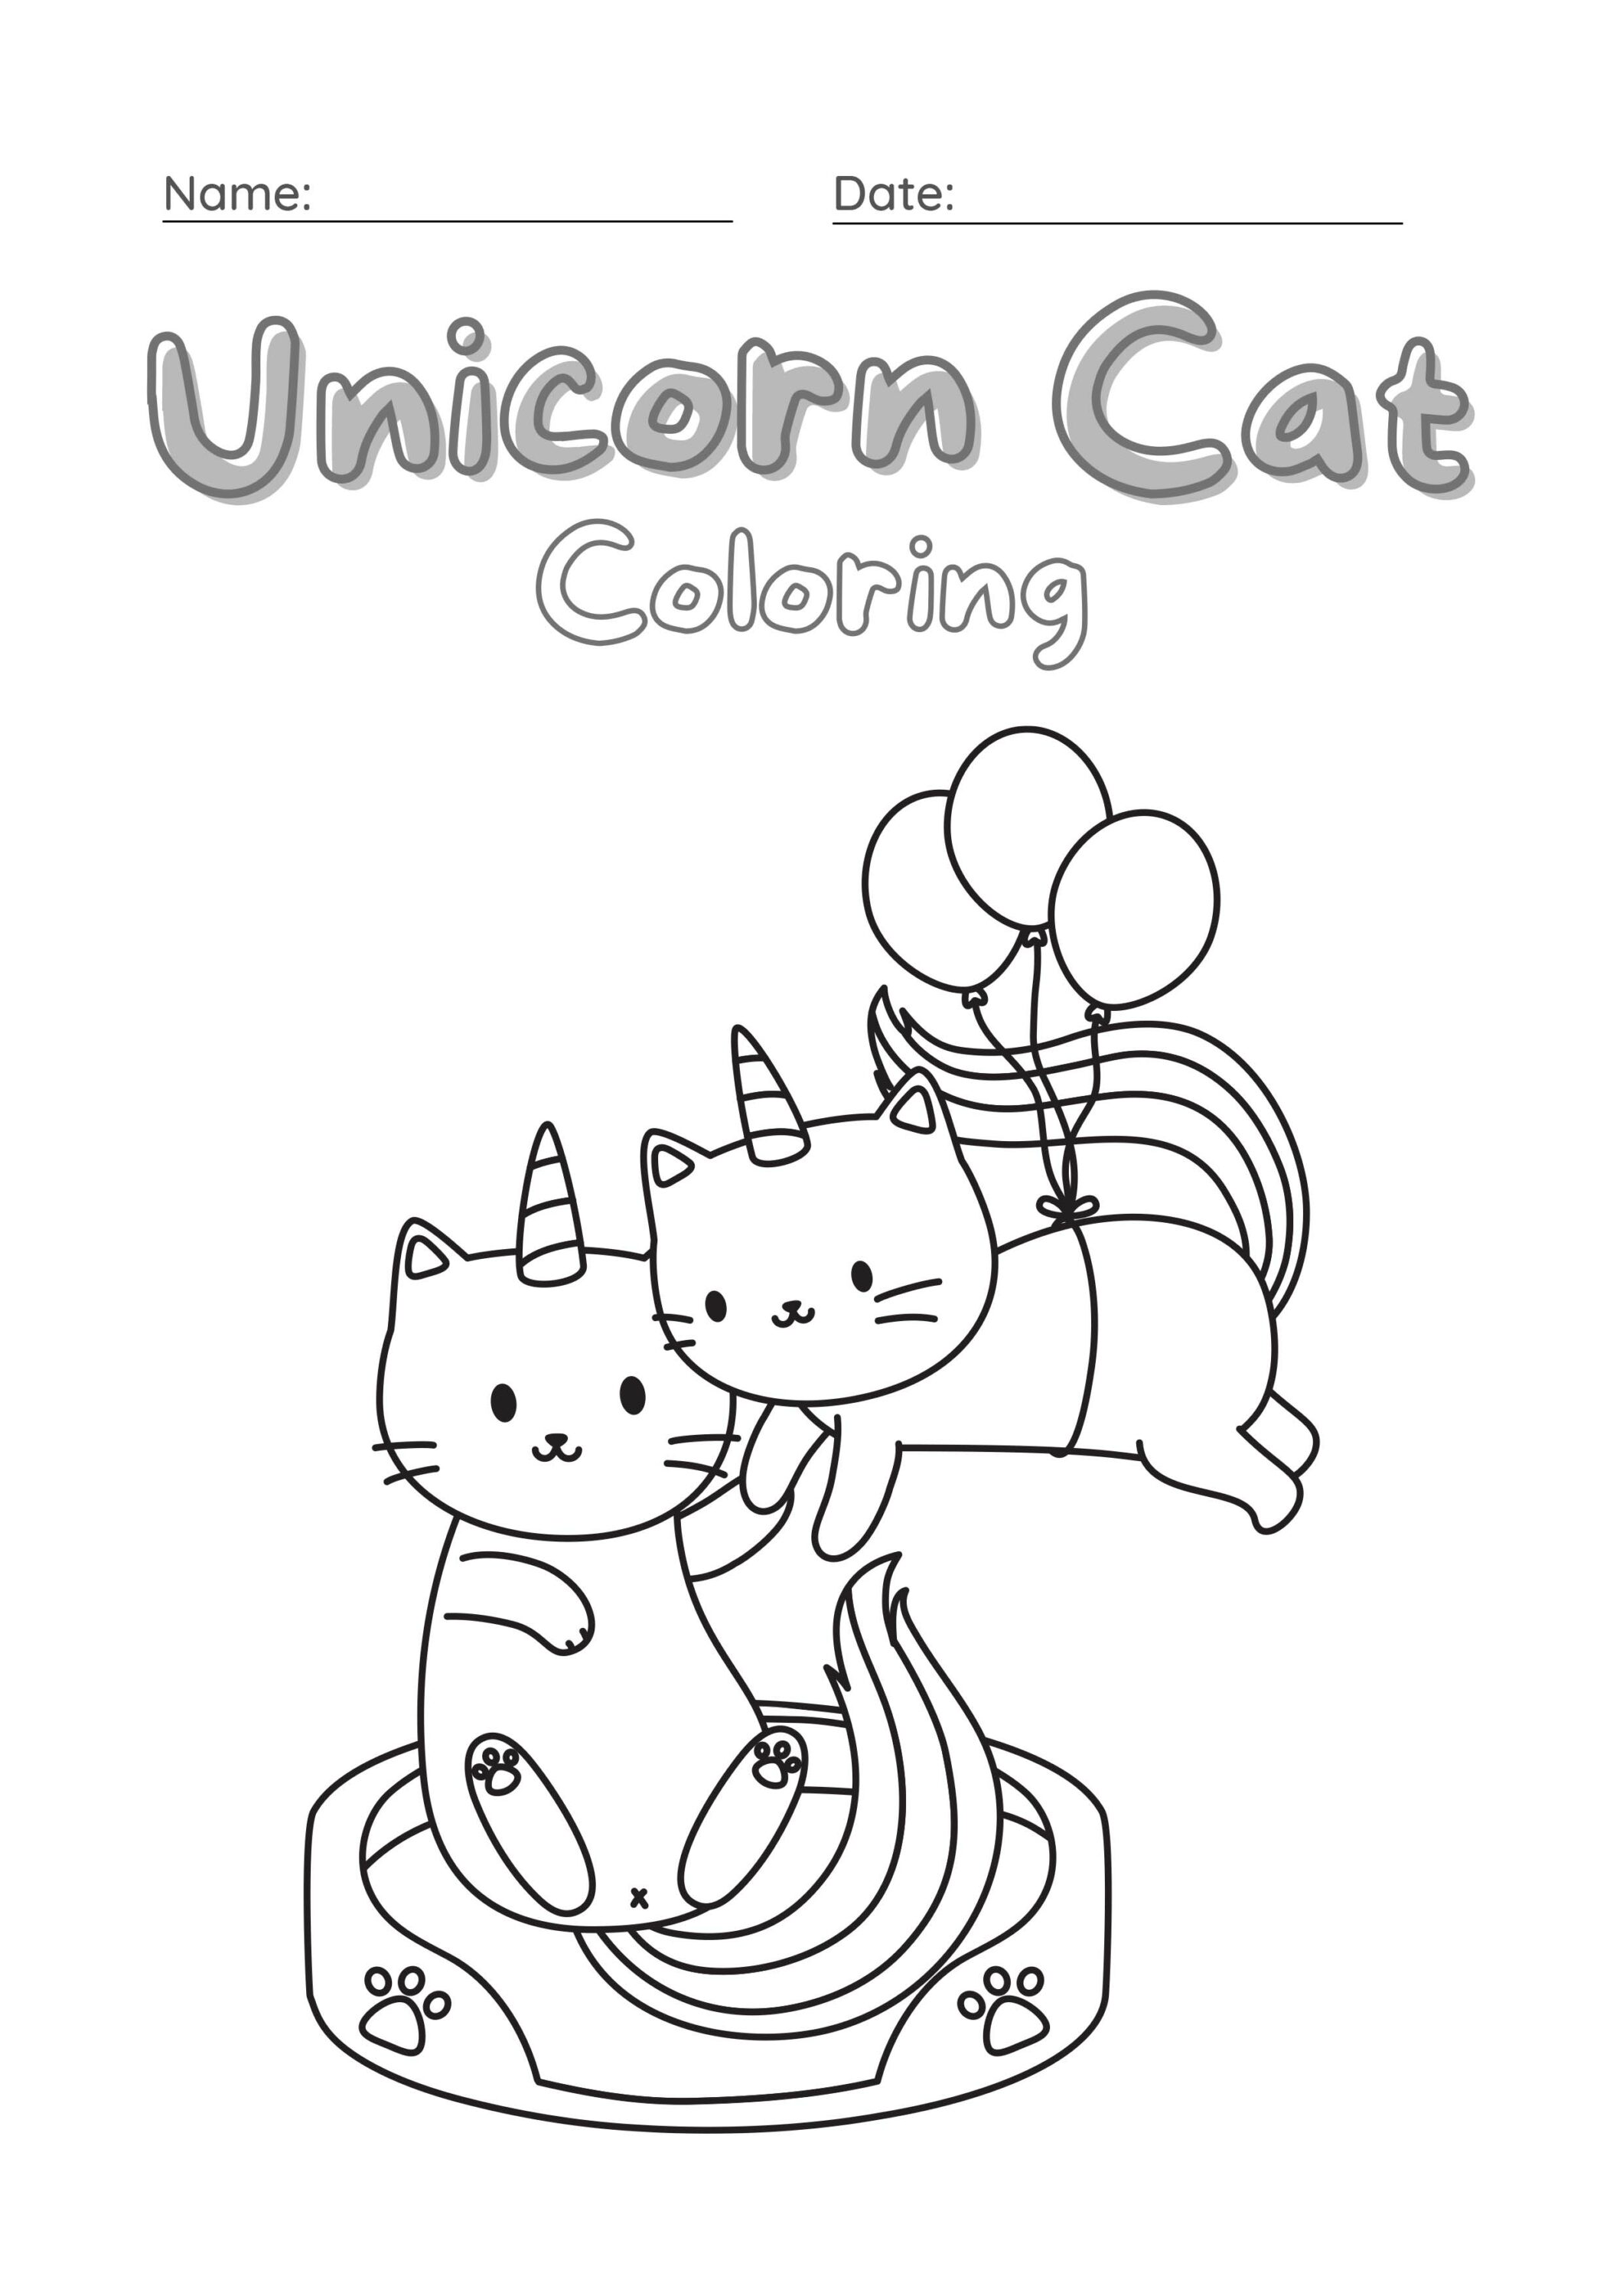 Unicorn Cat Coloring Worksheet Set 18